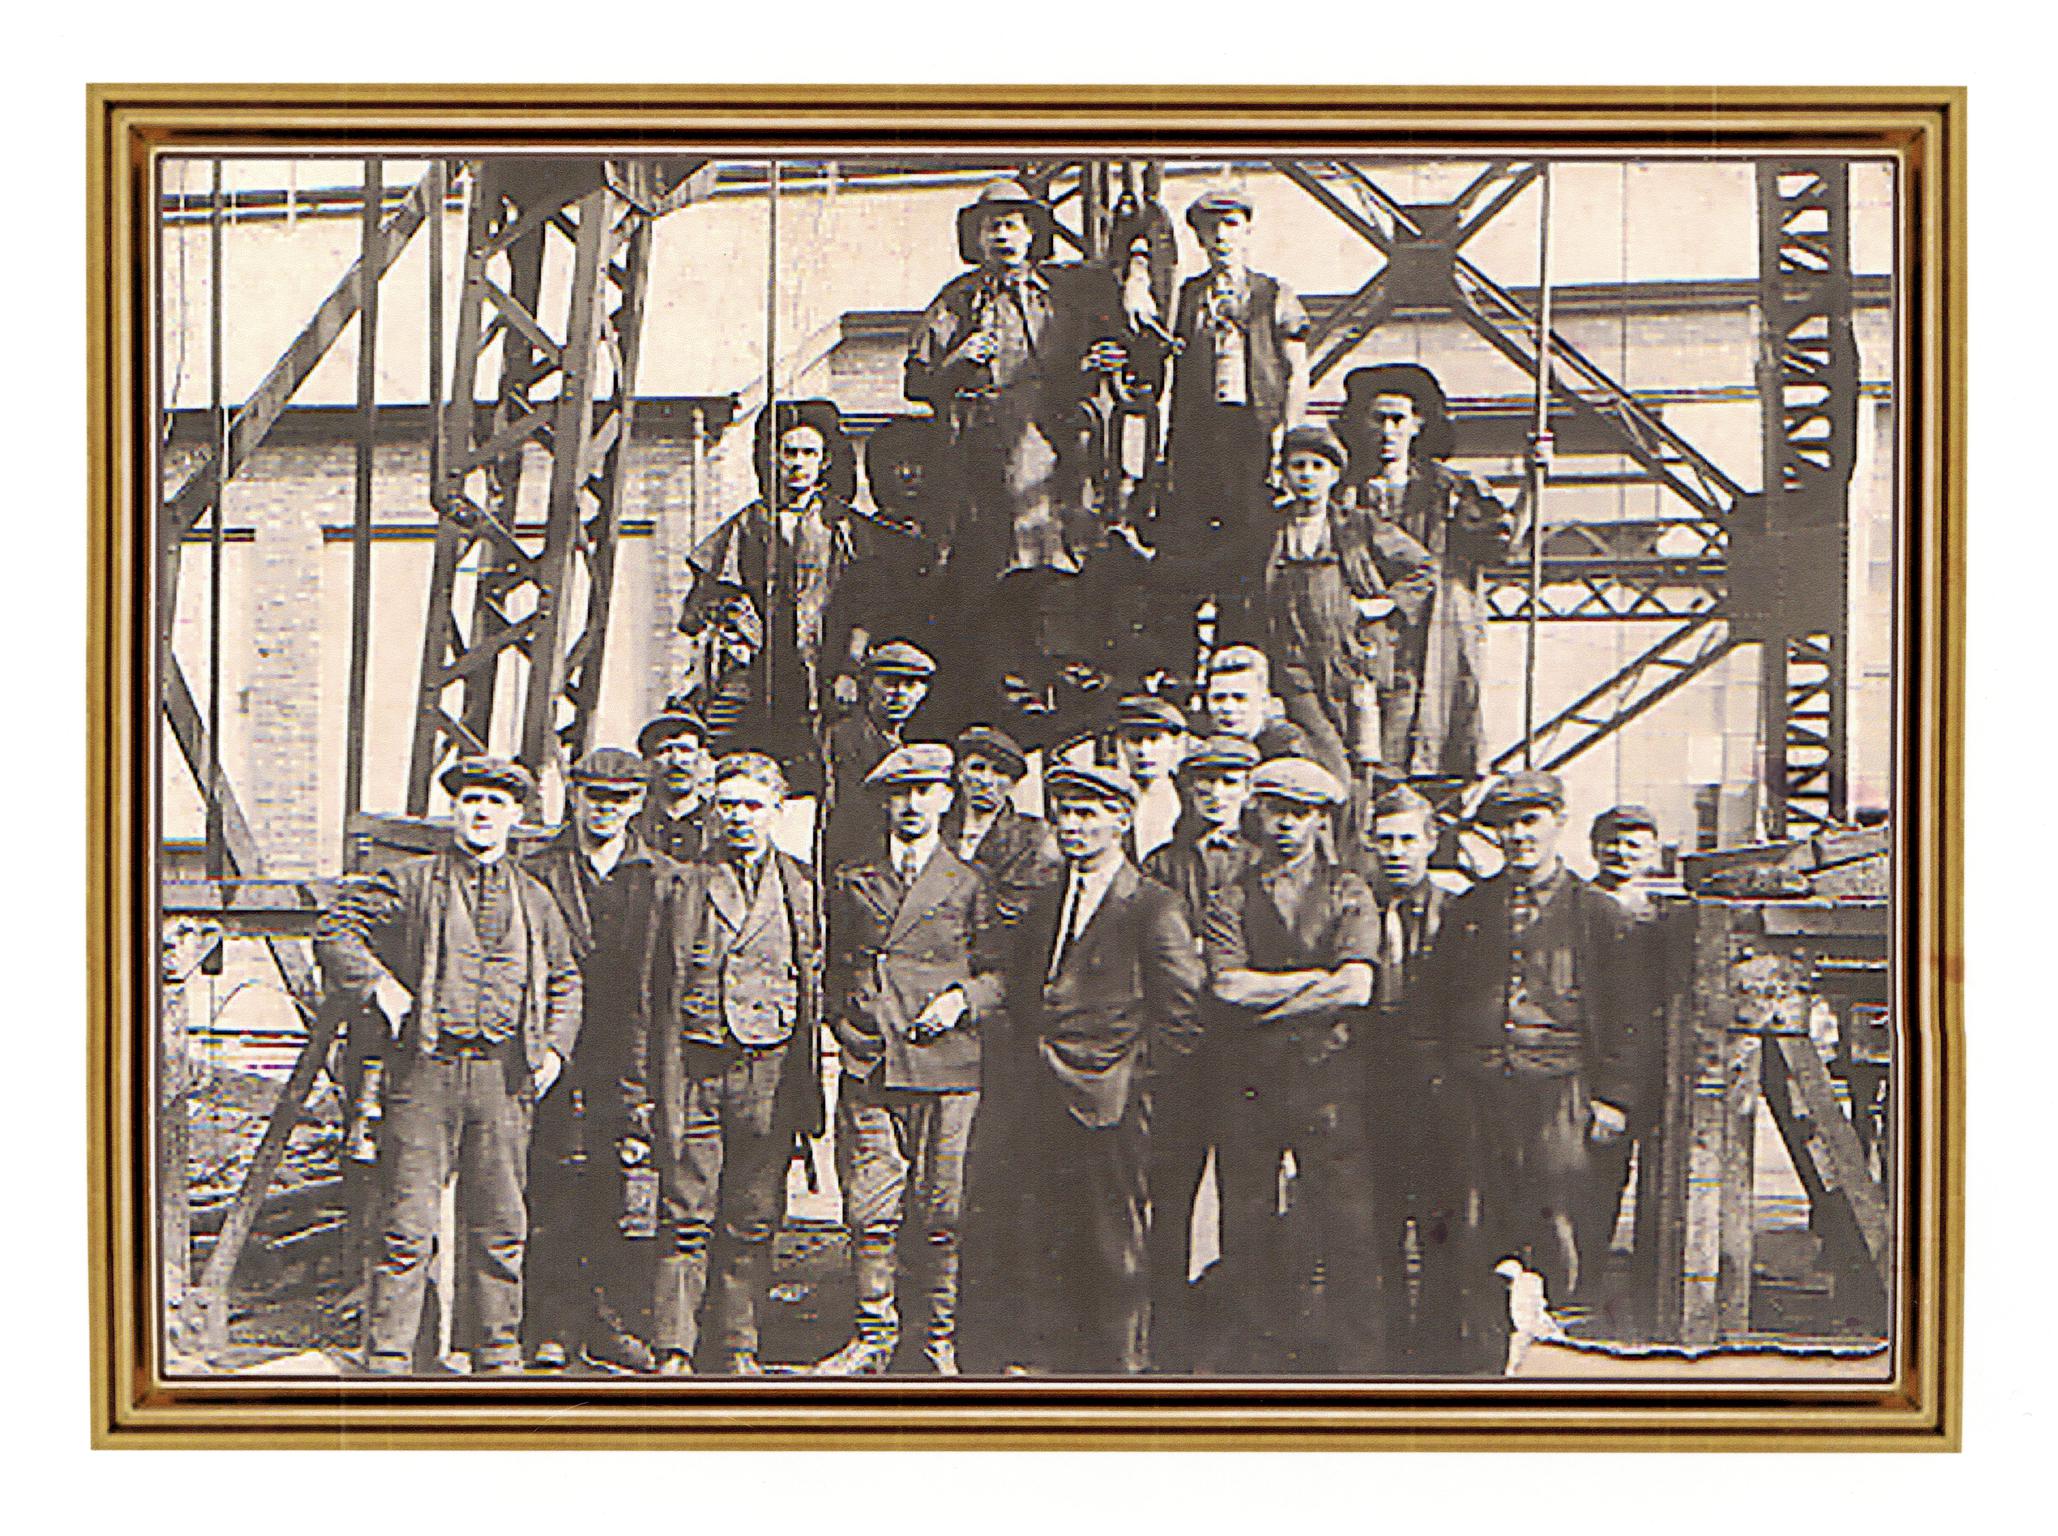 Wyllie Colliery, photograph